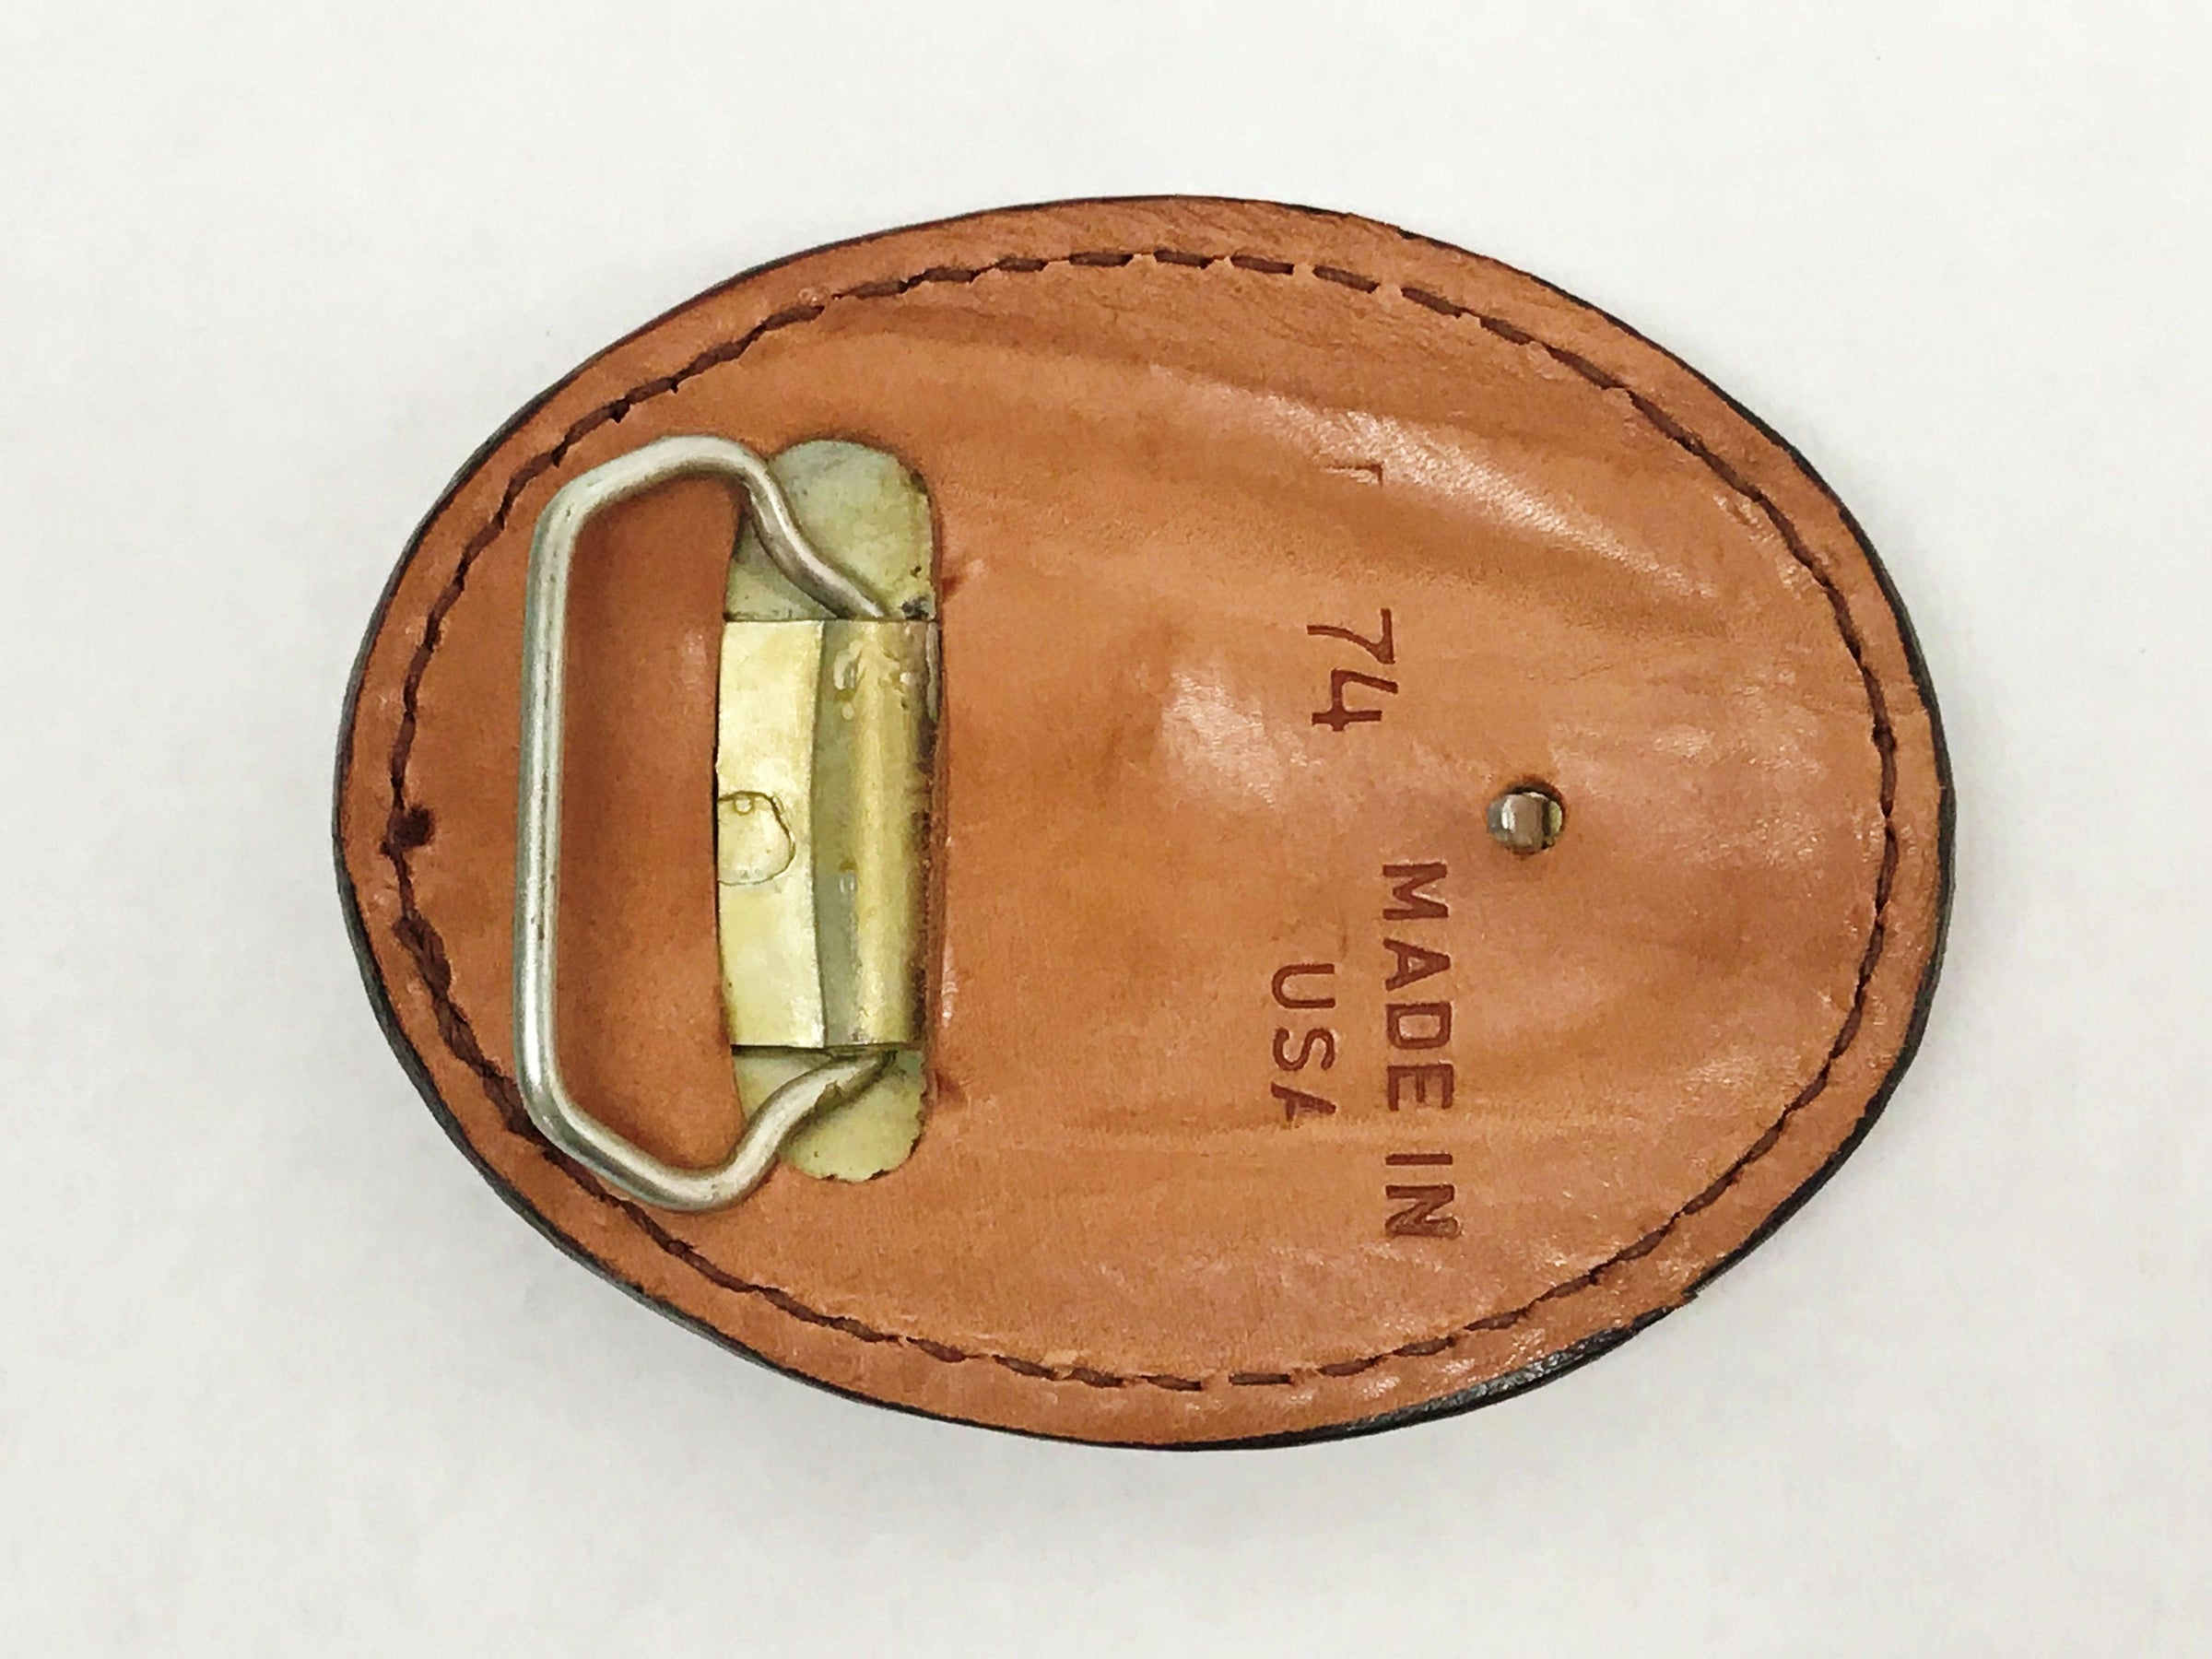 Vintage Tooled Leather Eagle Belt Bucke #74 | USA - Hers and His Treasures